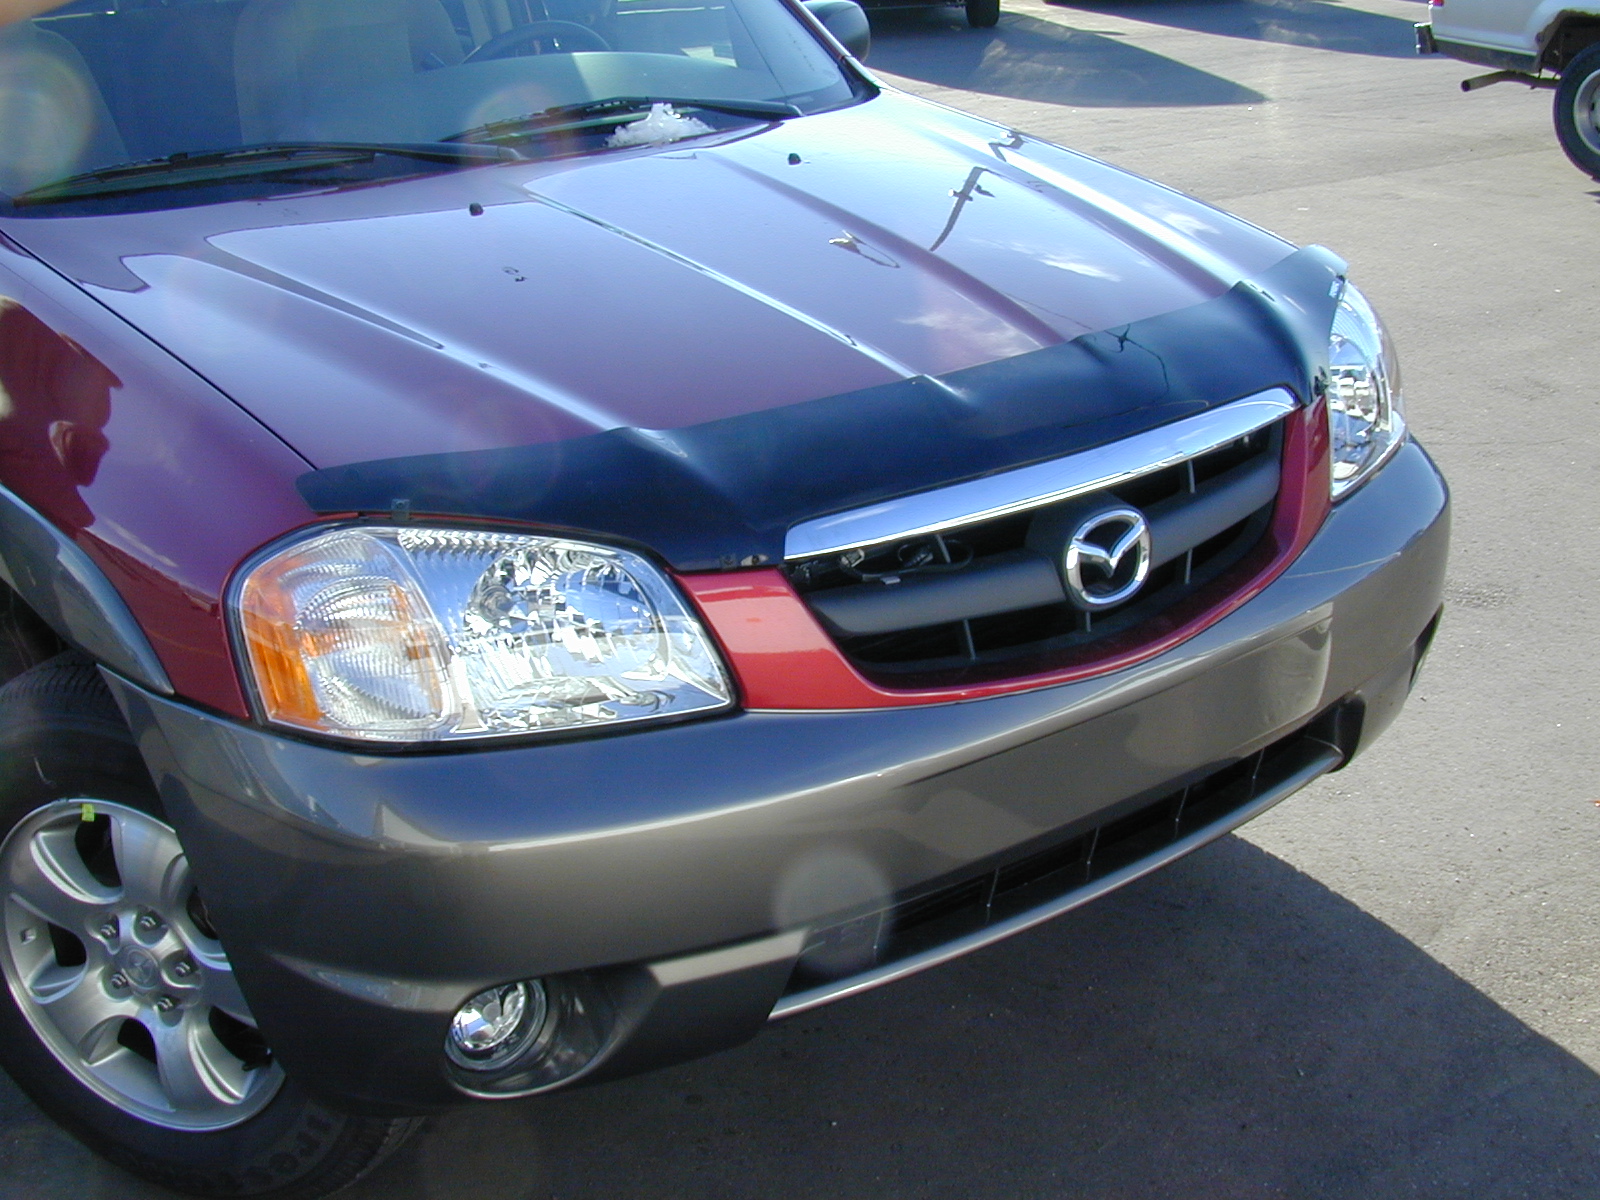 Mazda Tribute (2001-2007) FormFit Hood Protector